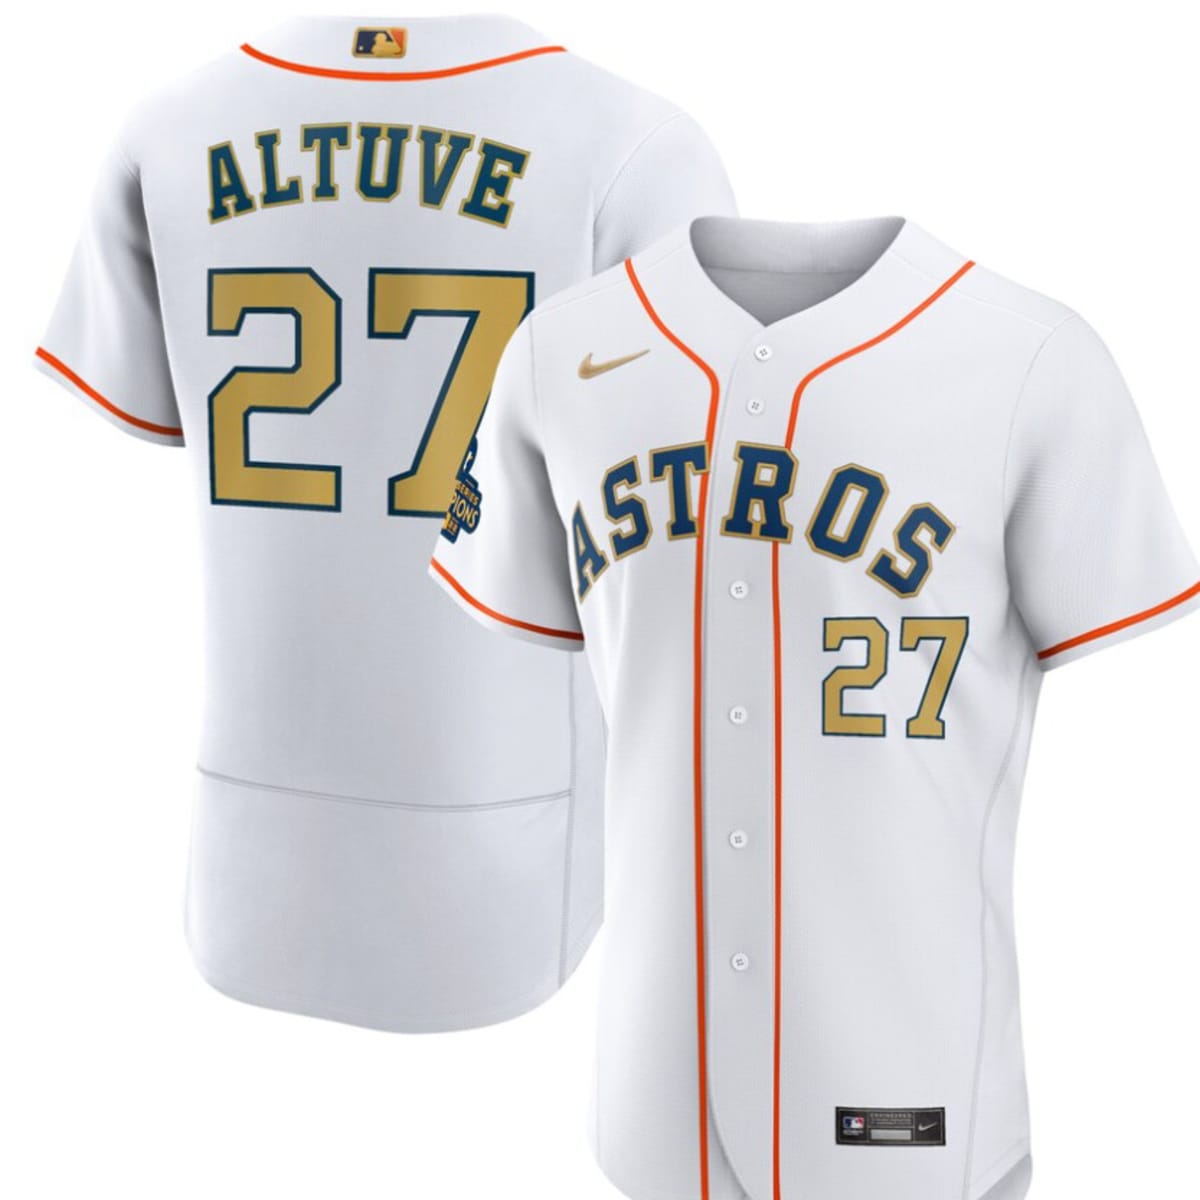 Cheap Houston Astros Apparel, Discount Astros Gear, MLB Astros